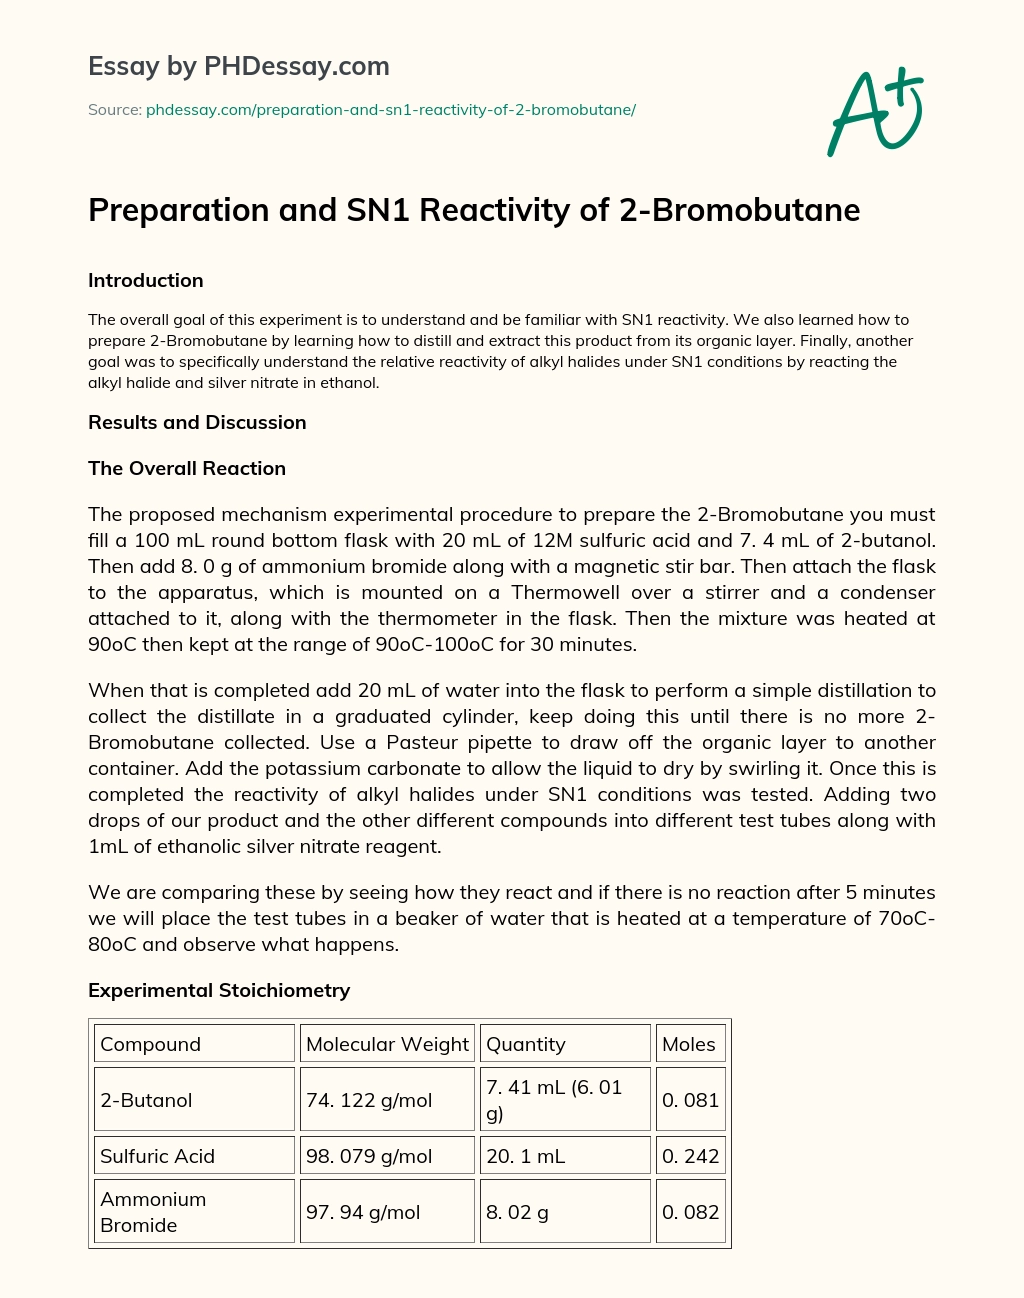 Preparation and SN1 Reactivity of 2-Bromobutane essay